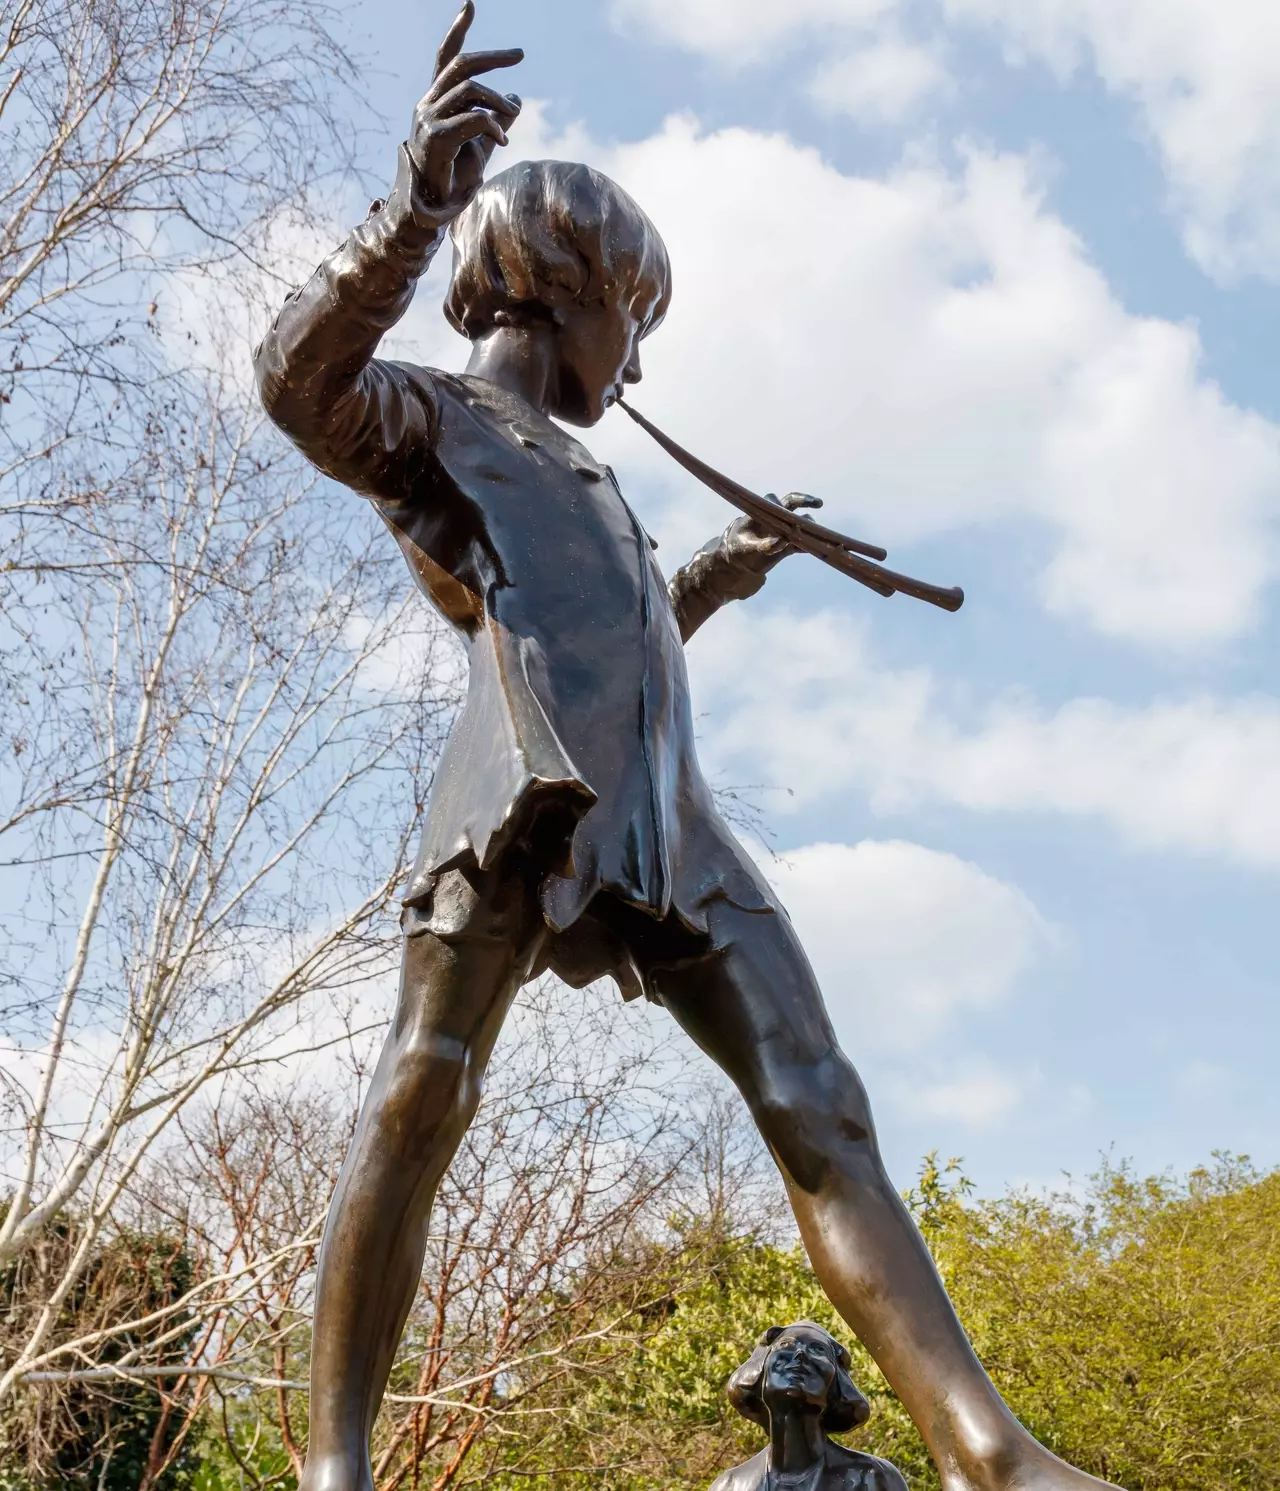 The Peter Pan statue in Kensington Gardens